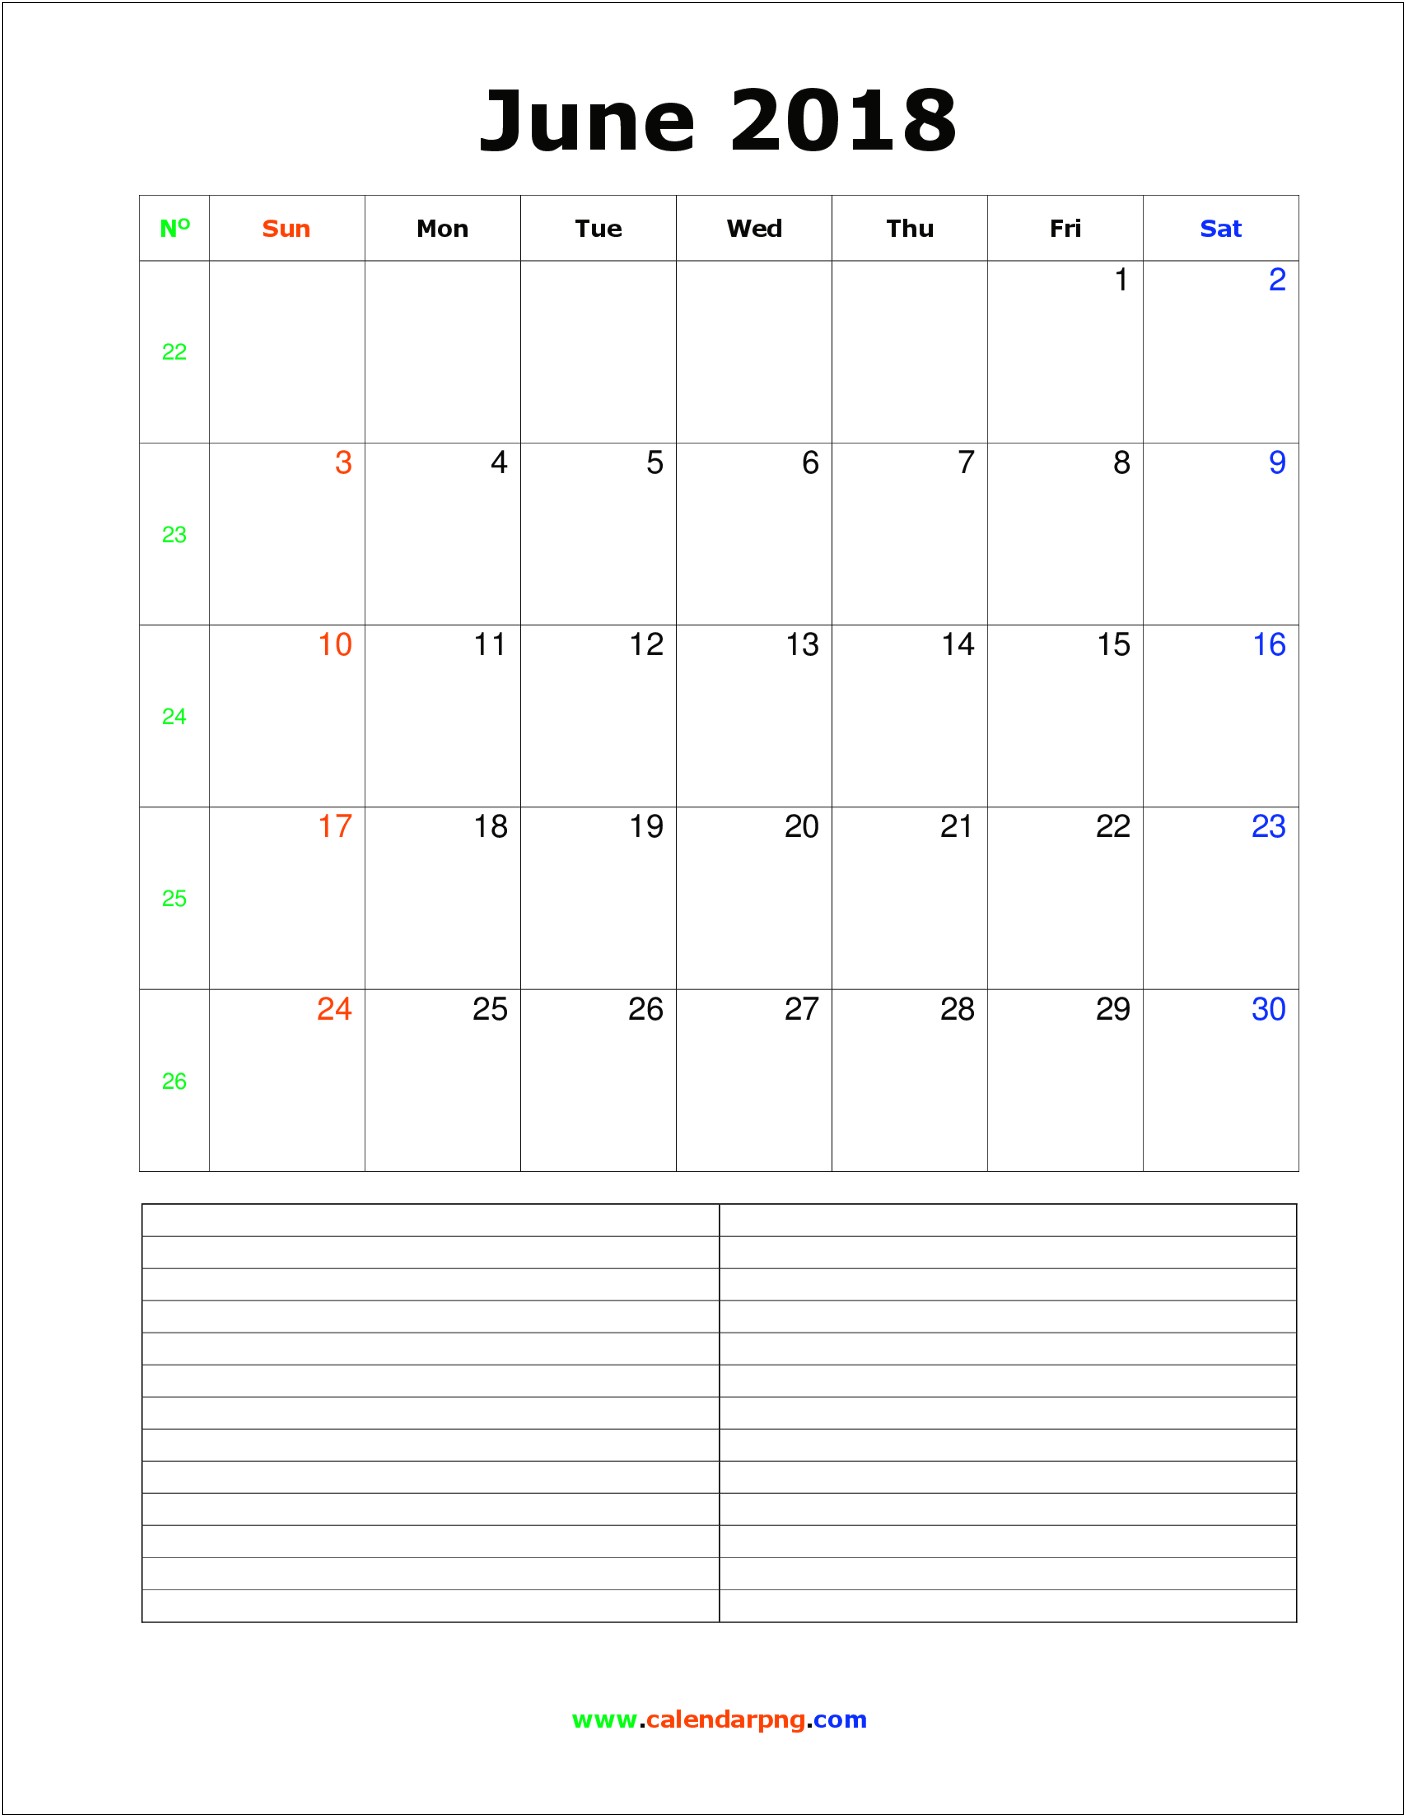 Free Monthly Calendar Templates June 2018